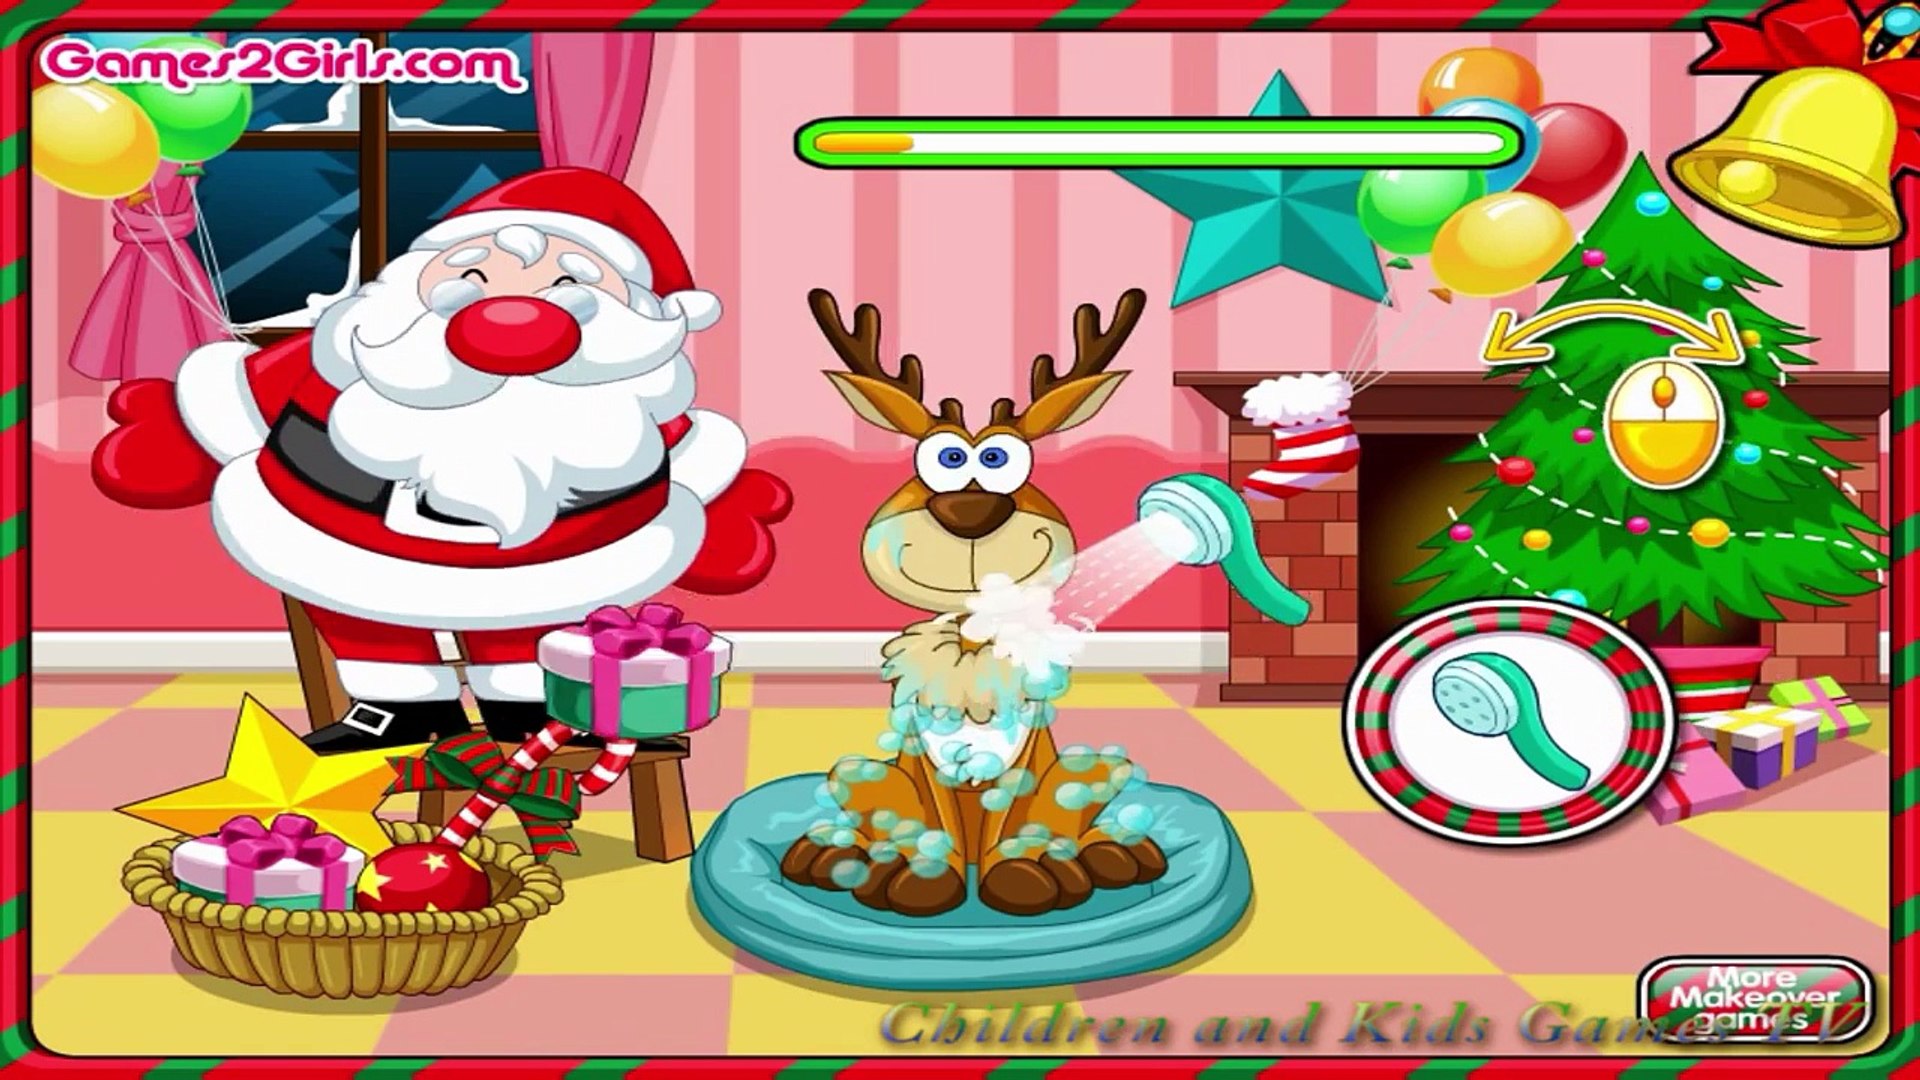 Santas Reindeer Care Game for Kids